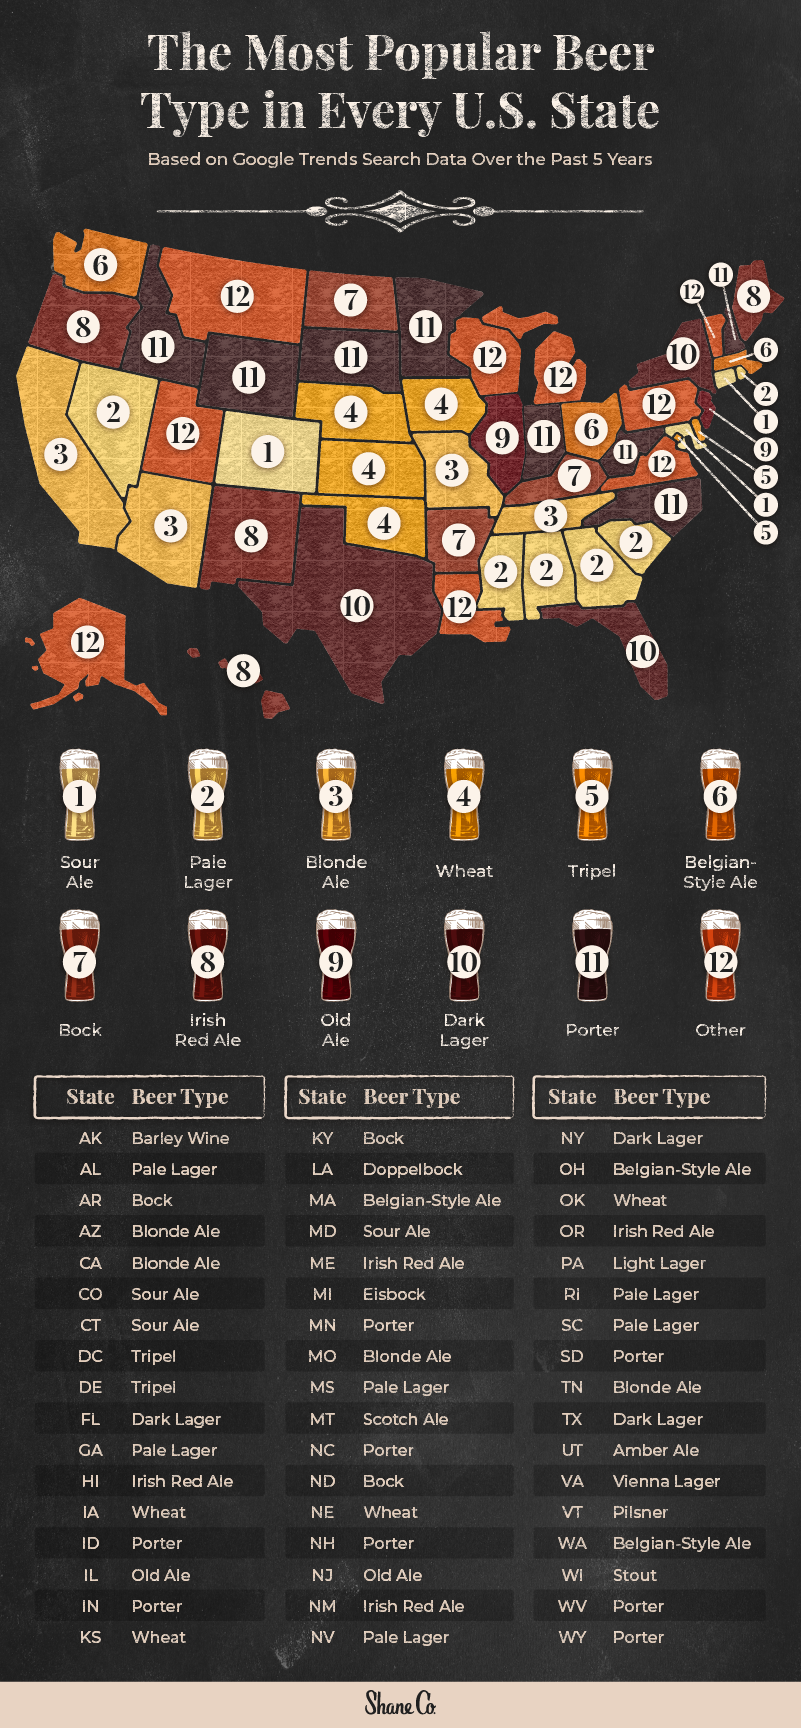 U.S. Map showing each state's favorite beer type